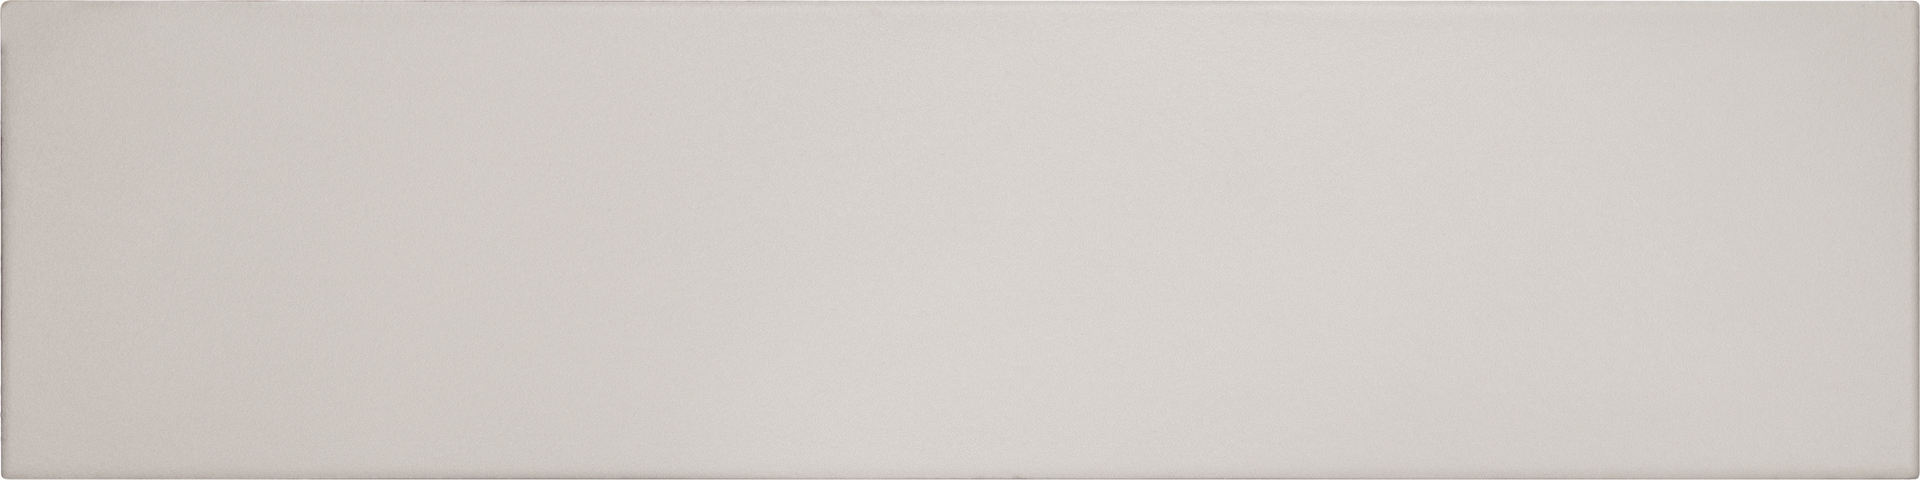 25889 Напольный Stromboli White Plume